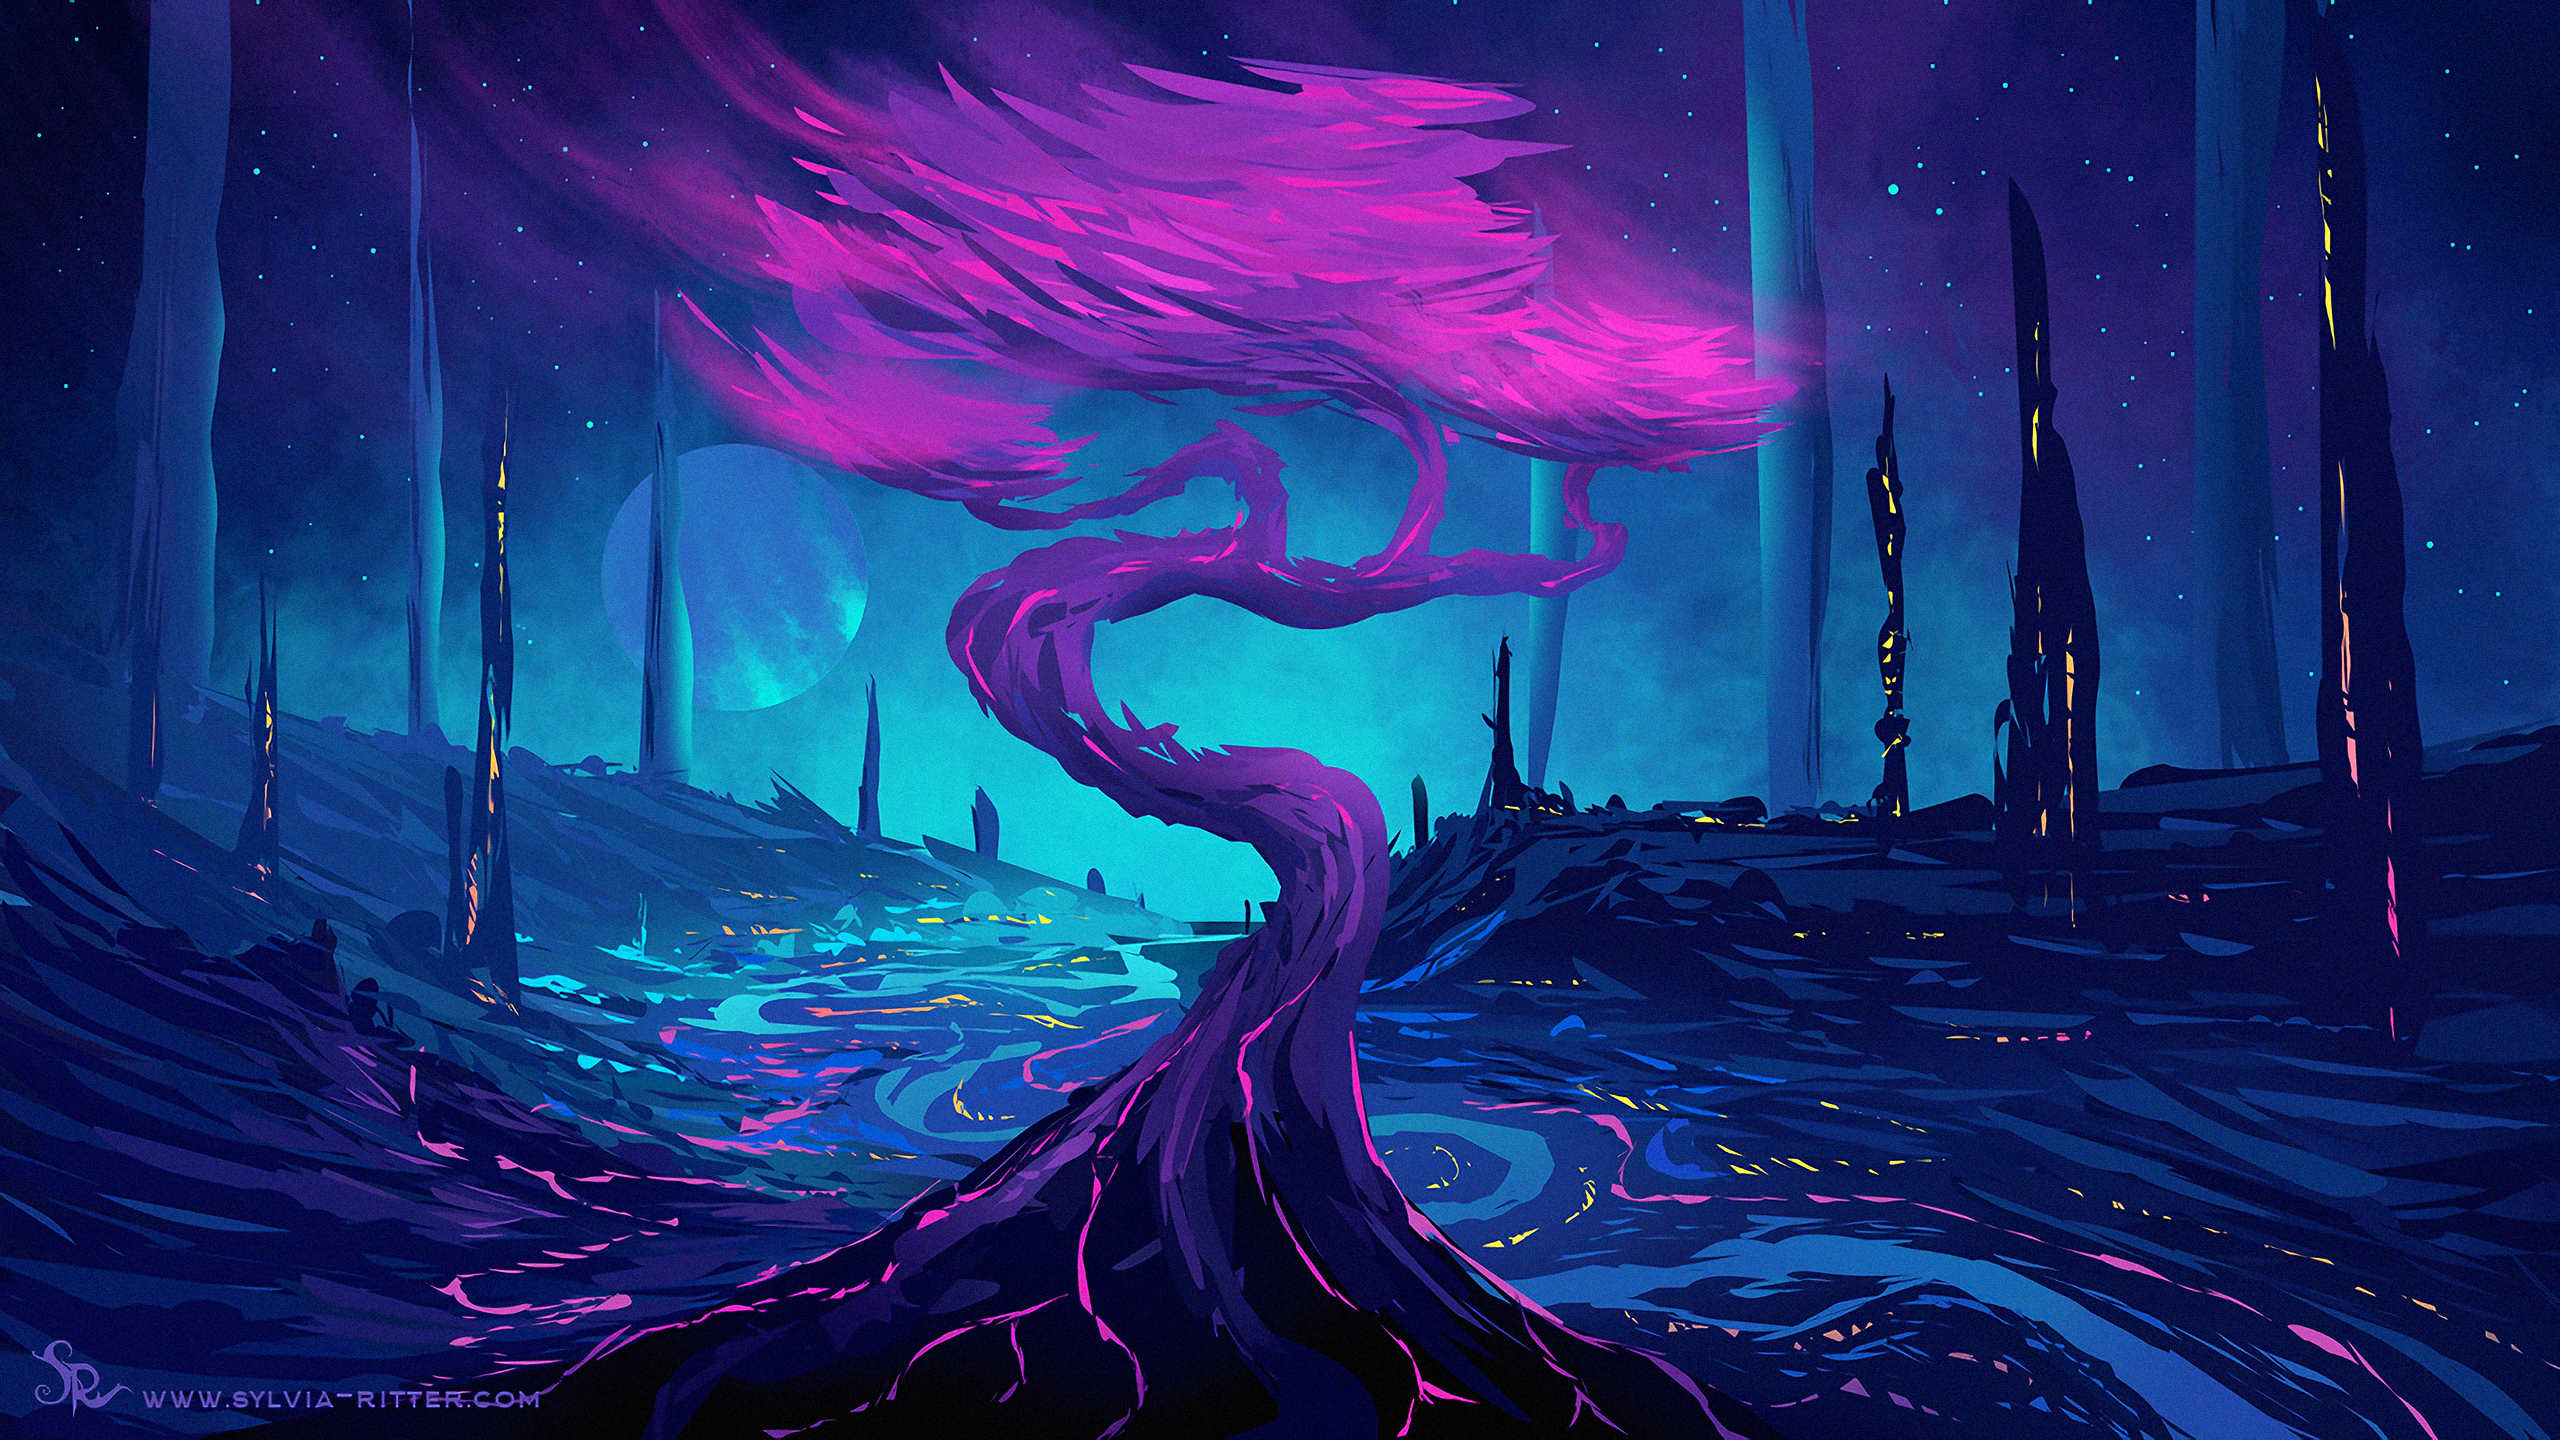 General 2560x1440 digital digital art artwork illustration drawing digital painting fantasy art trees planet purple blue pink space landscape nature aliens science fiction DeviantArt